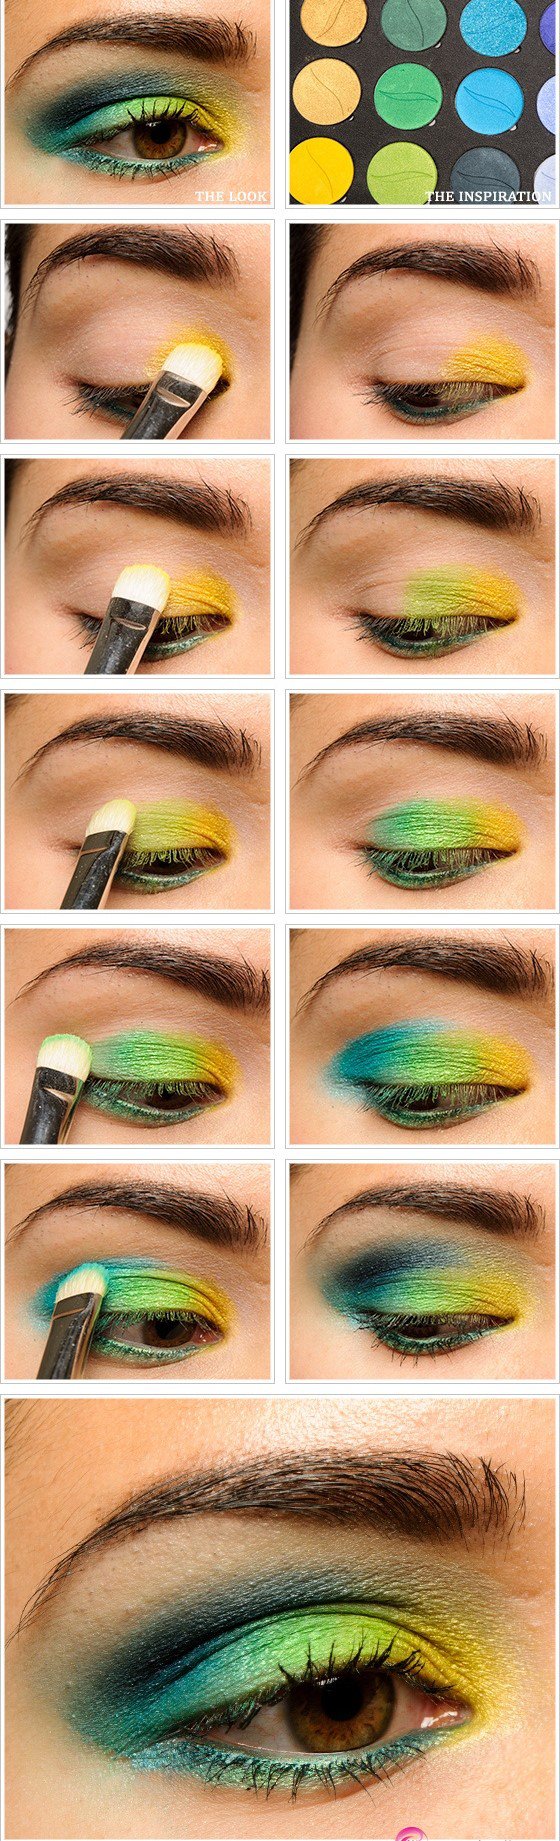 Colorful Eye Makeup Tutorial.